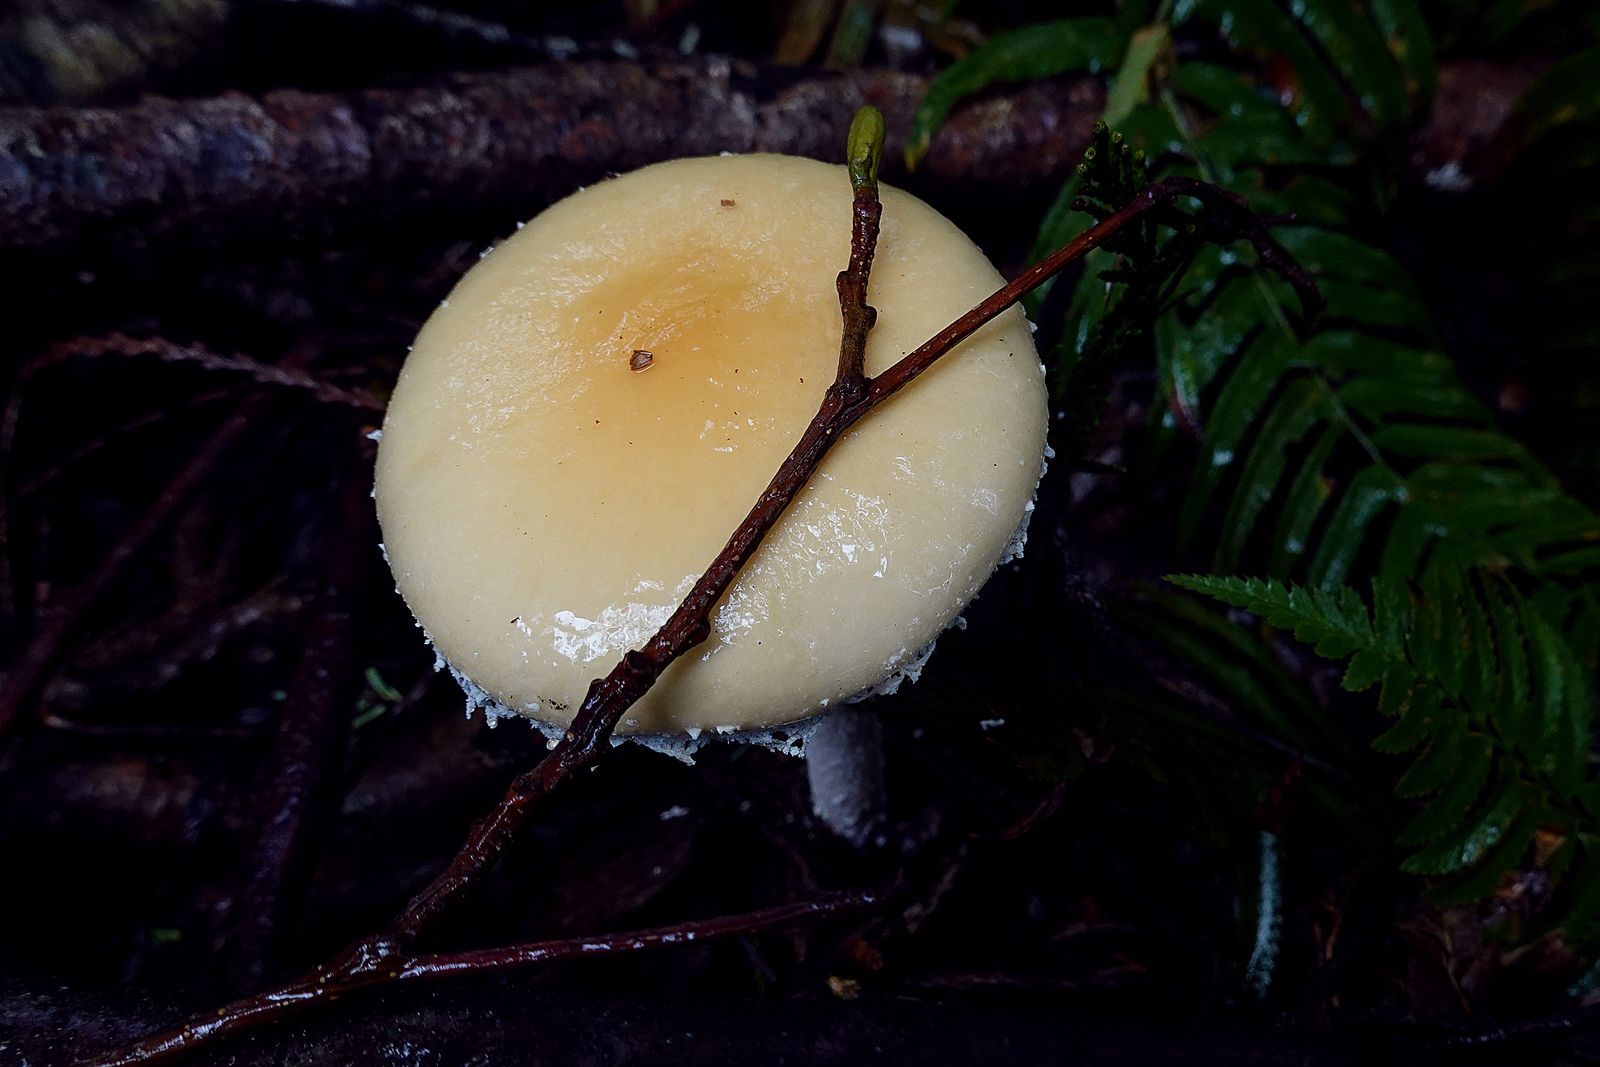  A beautiful mushroom hidden in the ferns 